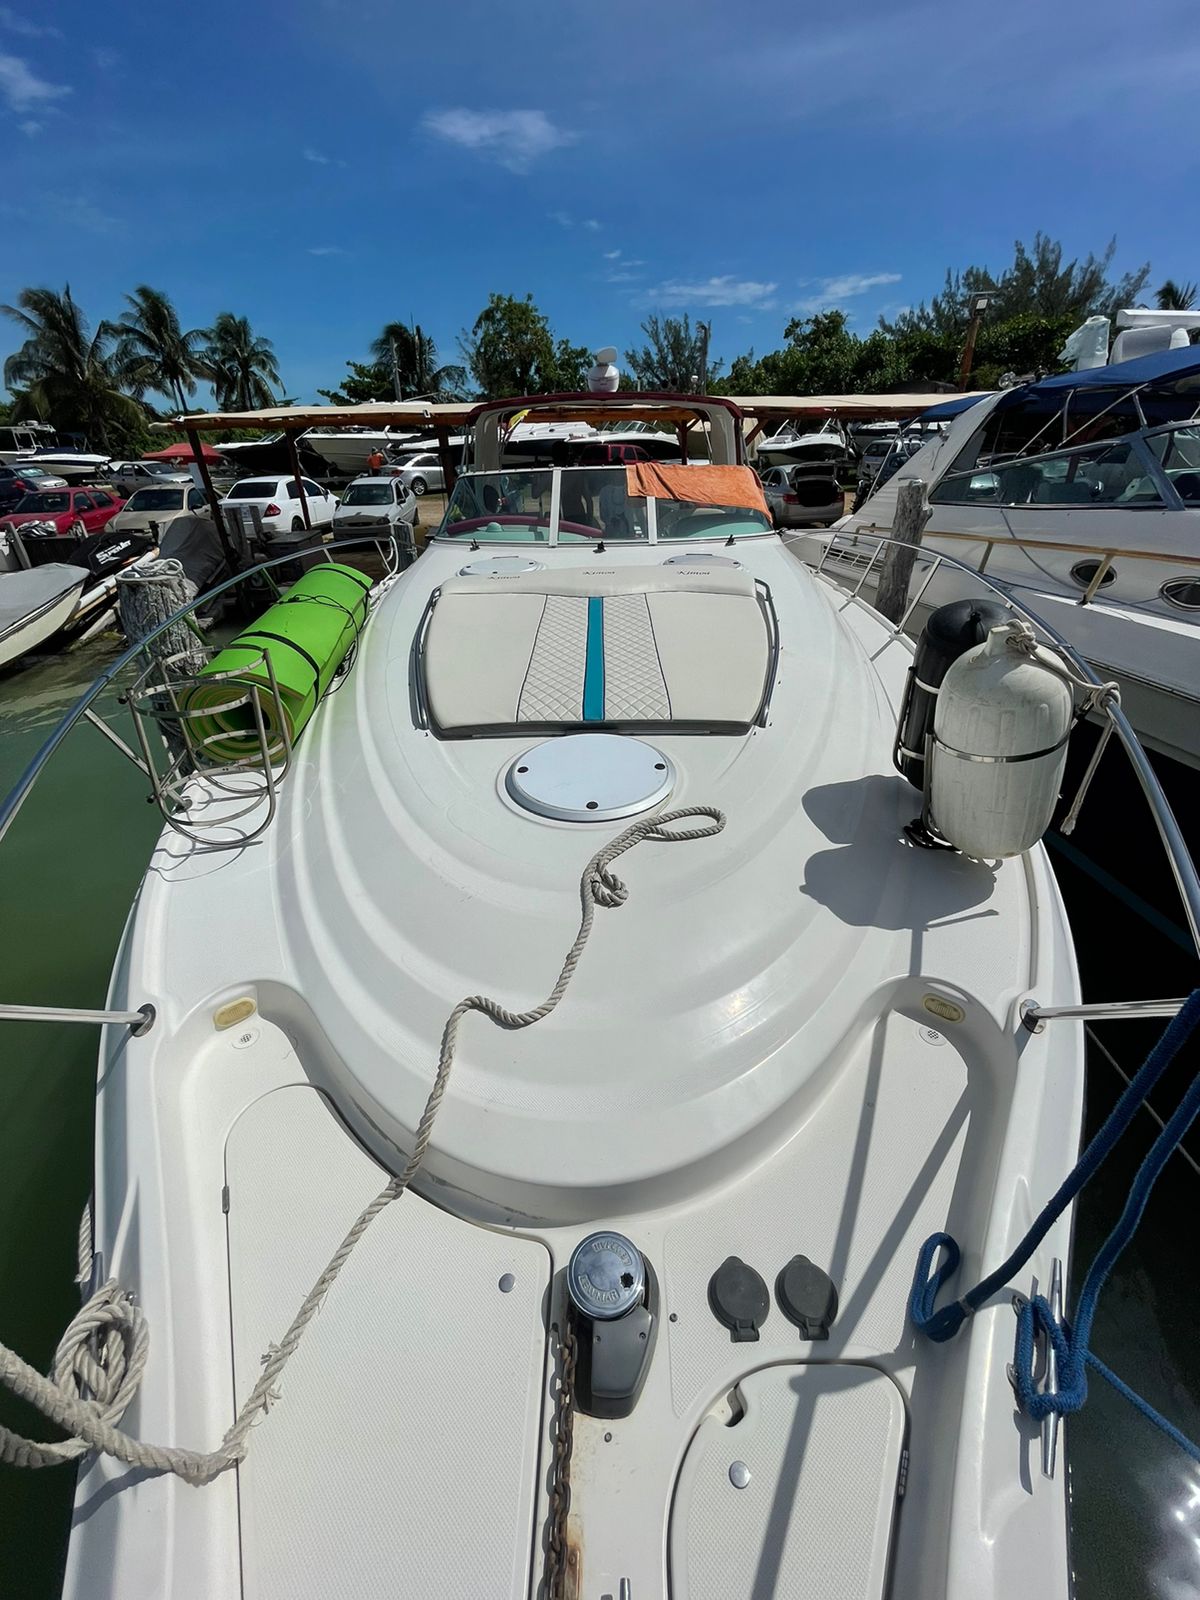 Yacht maxum Cancun 42 ft